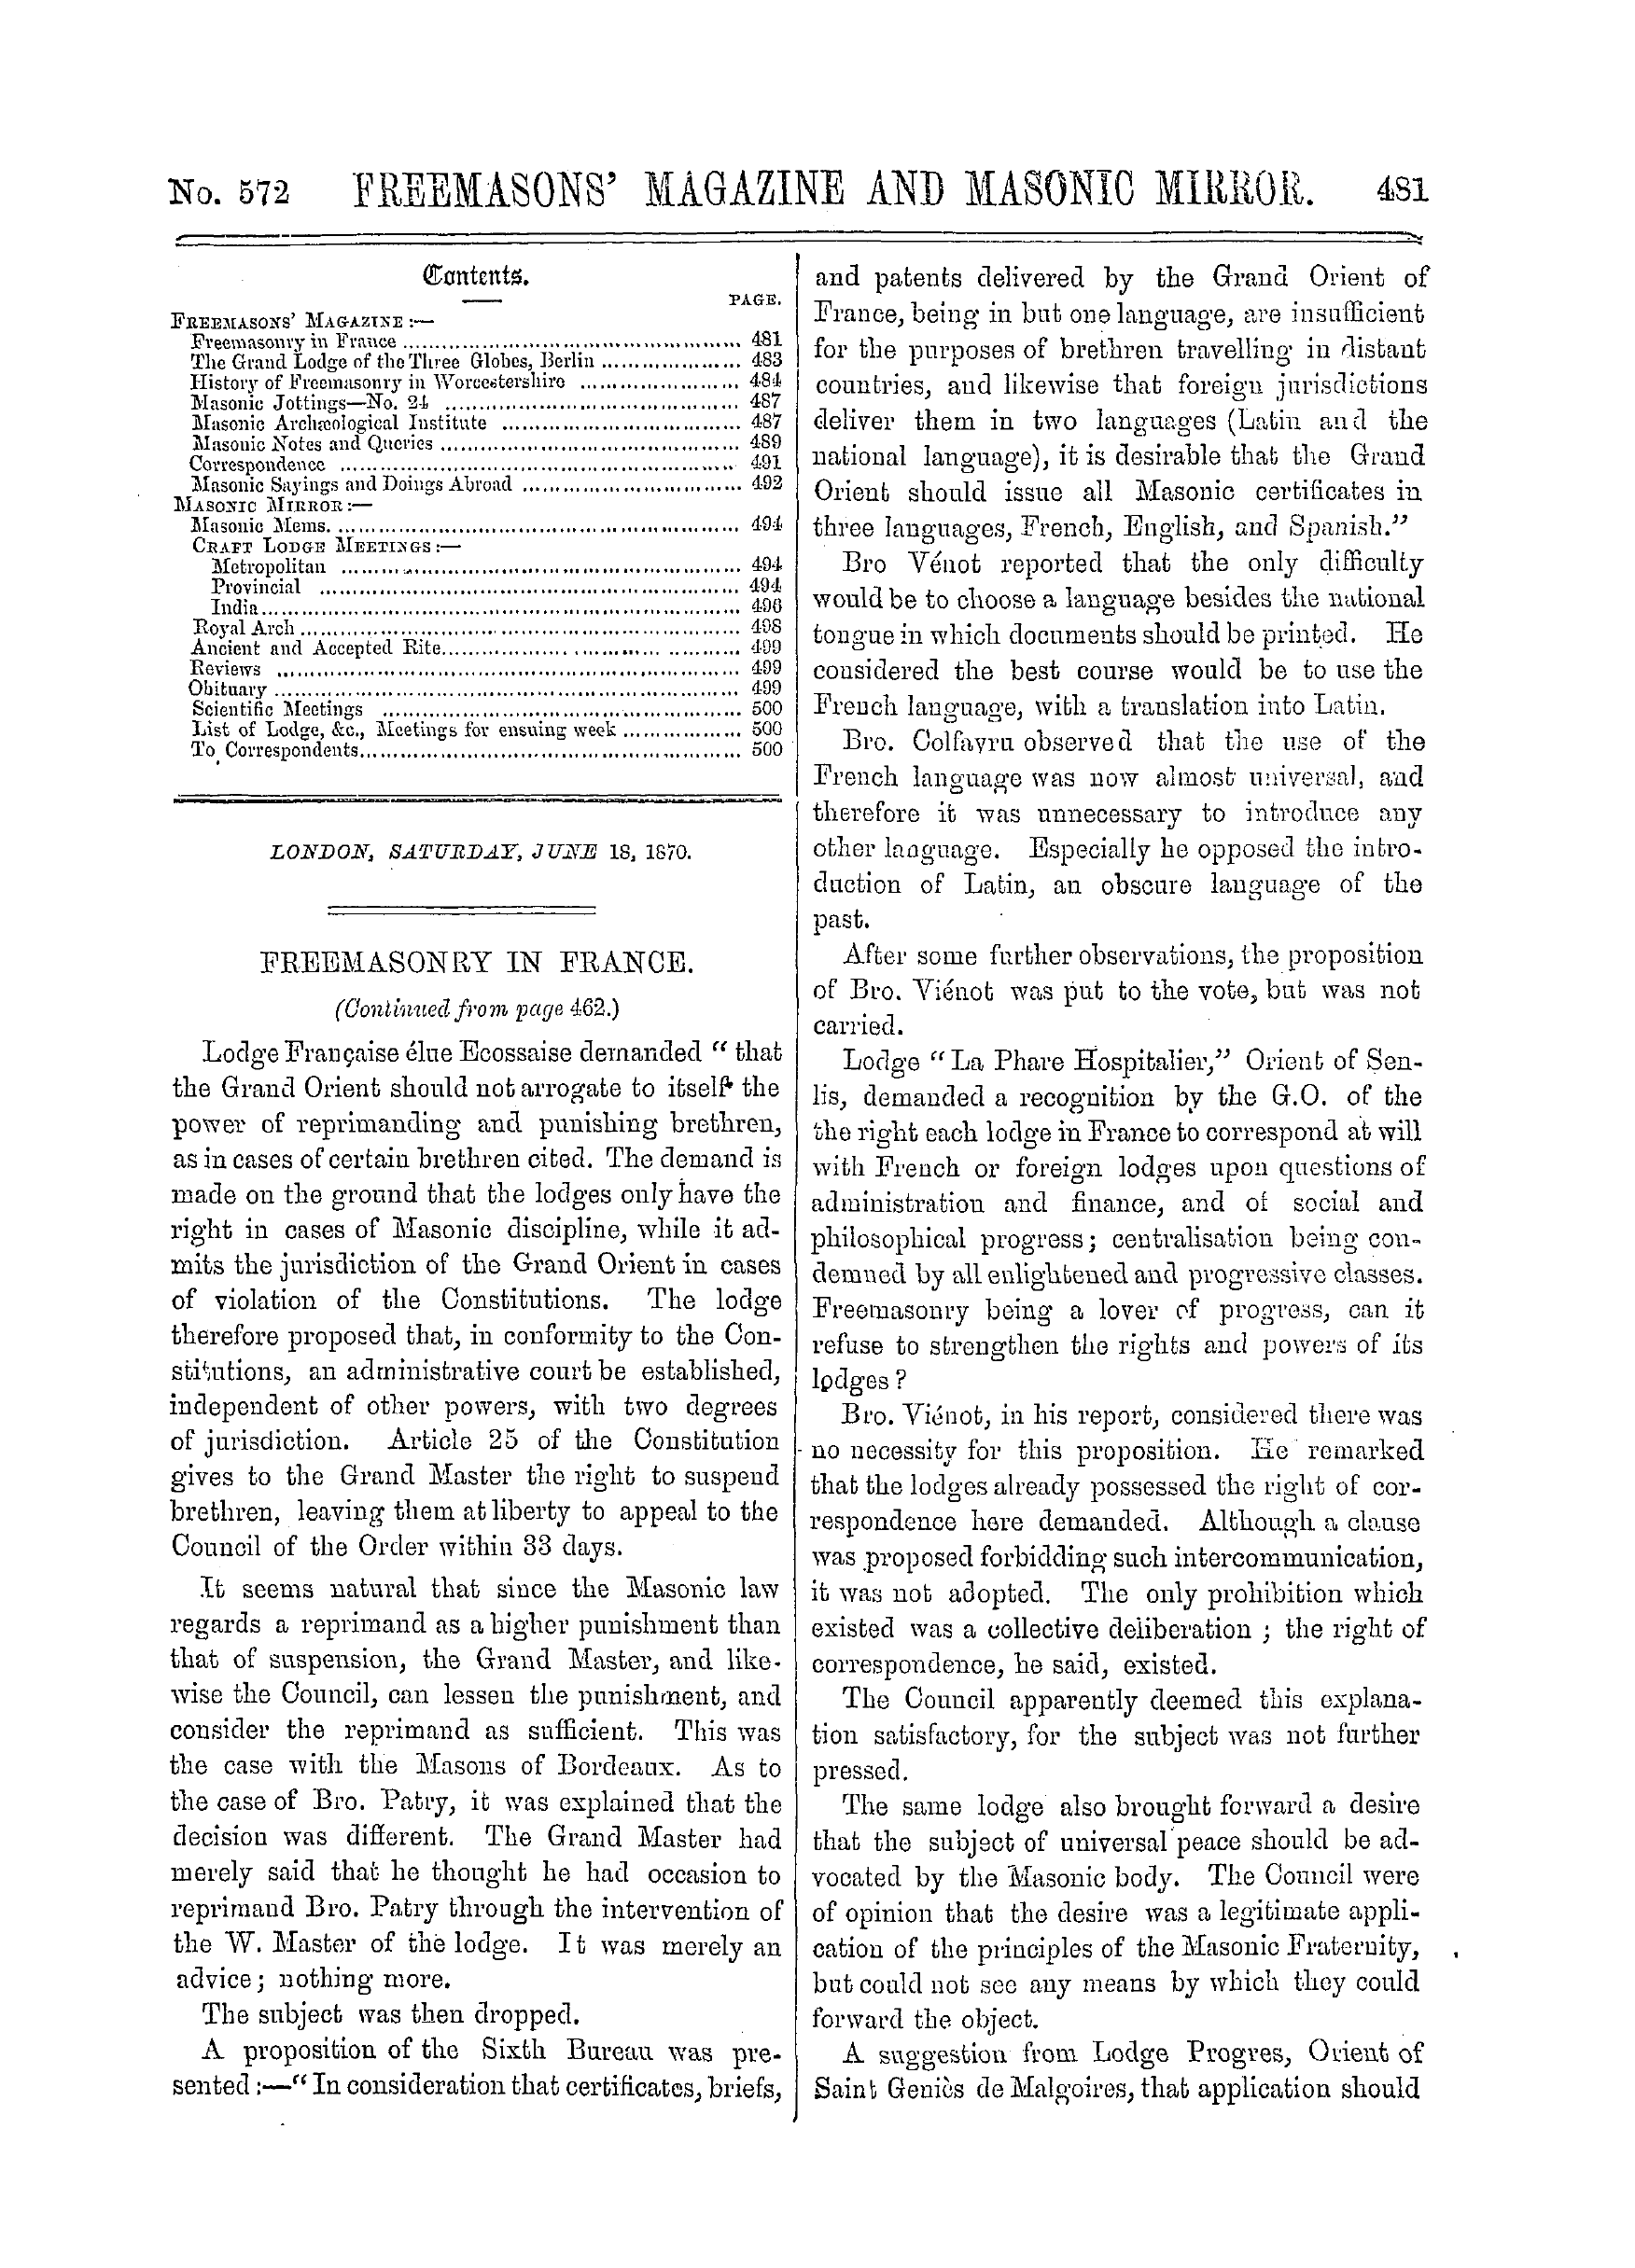 The Freemasons' Monthly Magazine: 1870-06-18 - Ar00100